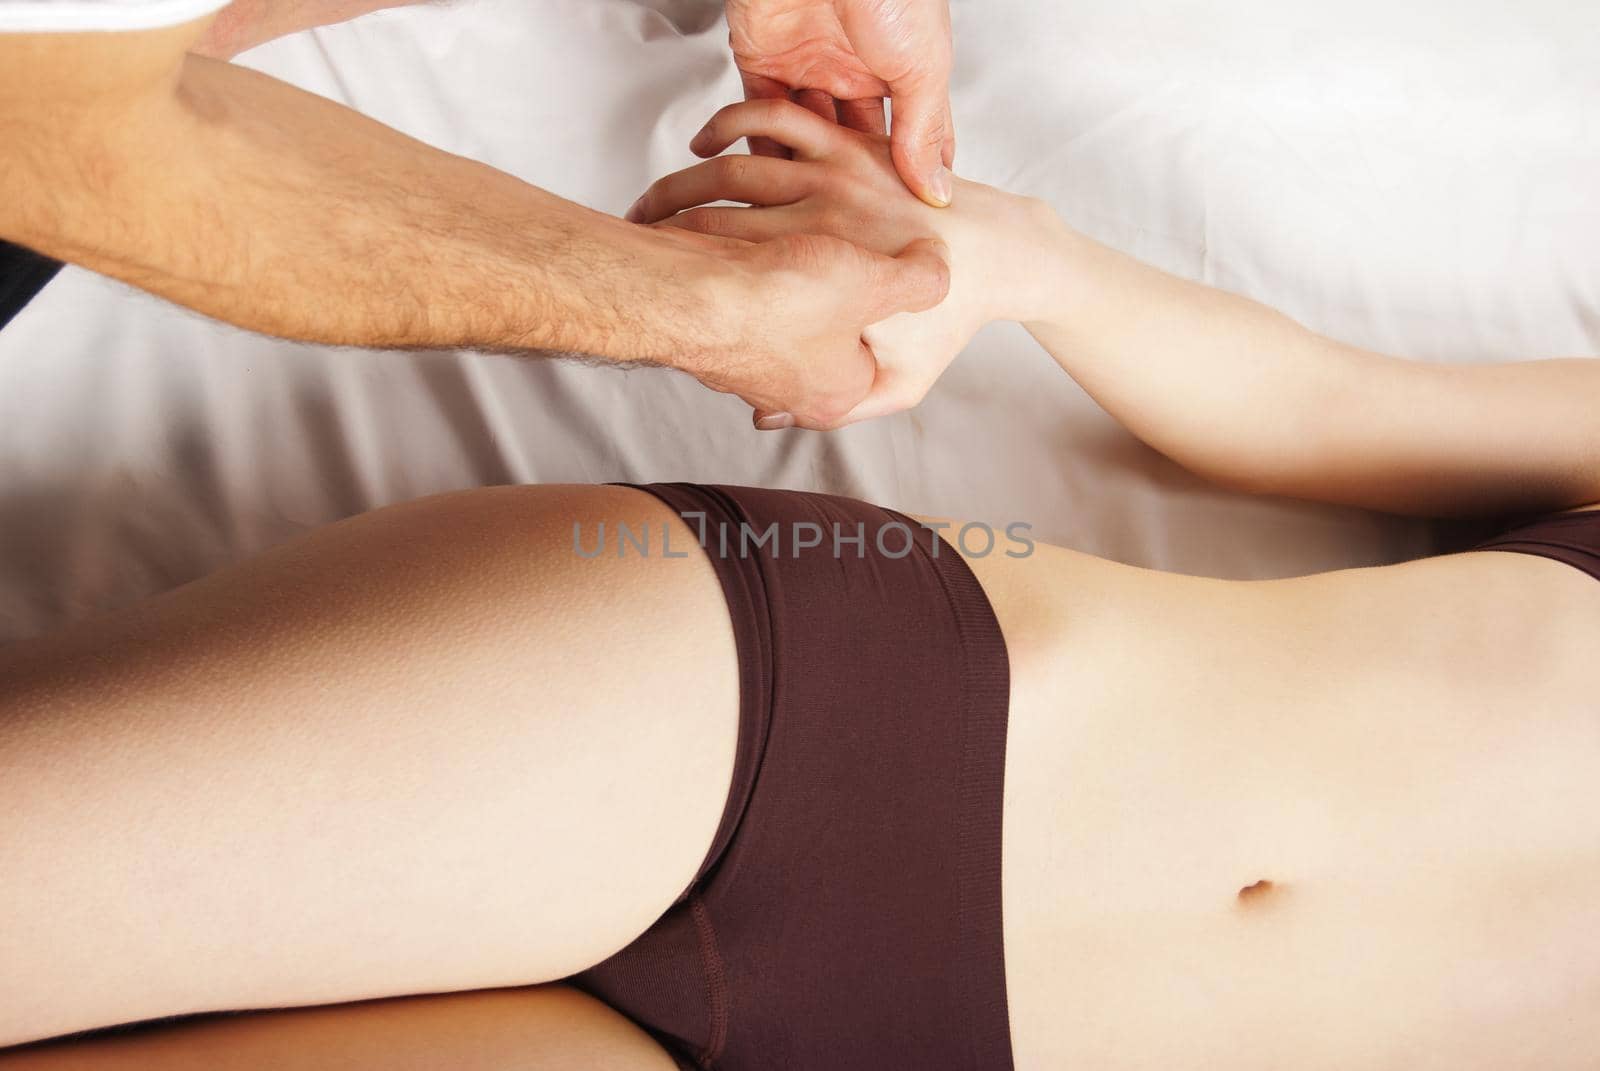 pretty woman getting hand massage by Julenochek